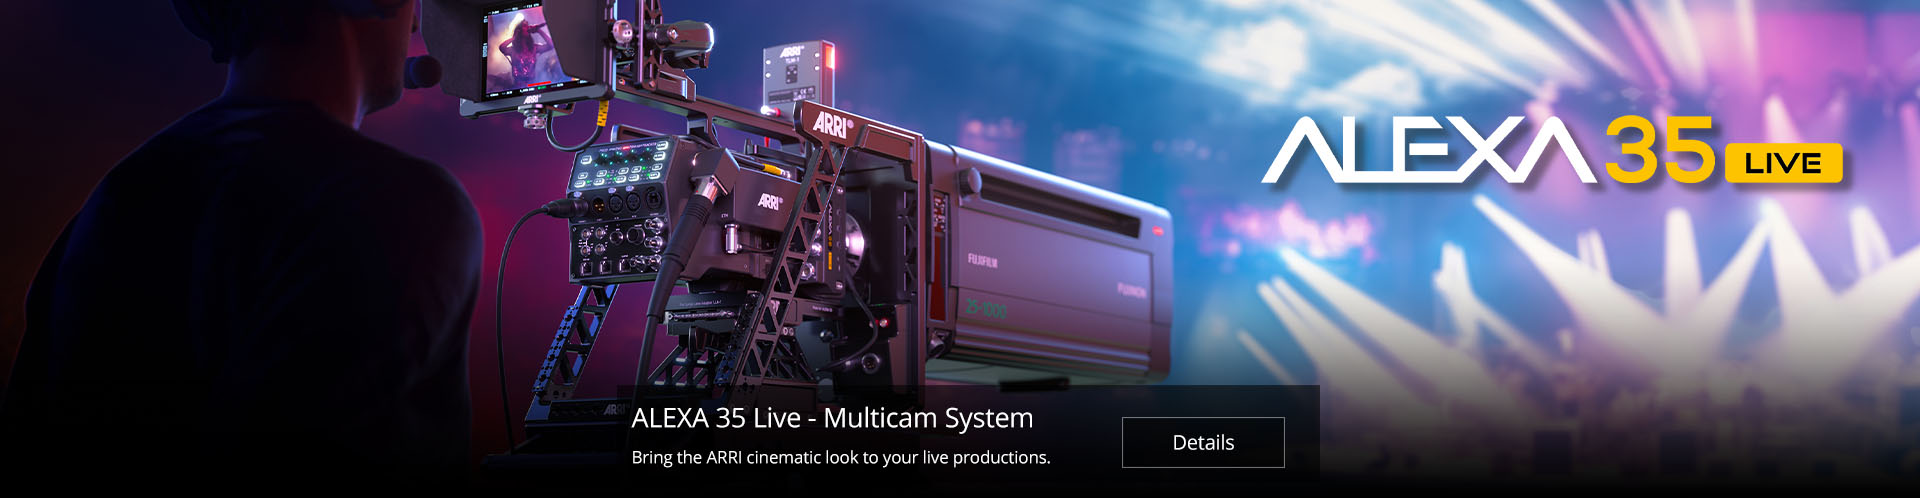 ARRI ALEXA 35 LIVE Multicam System Live Production